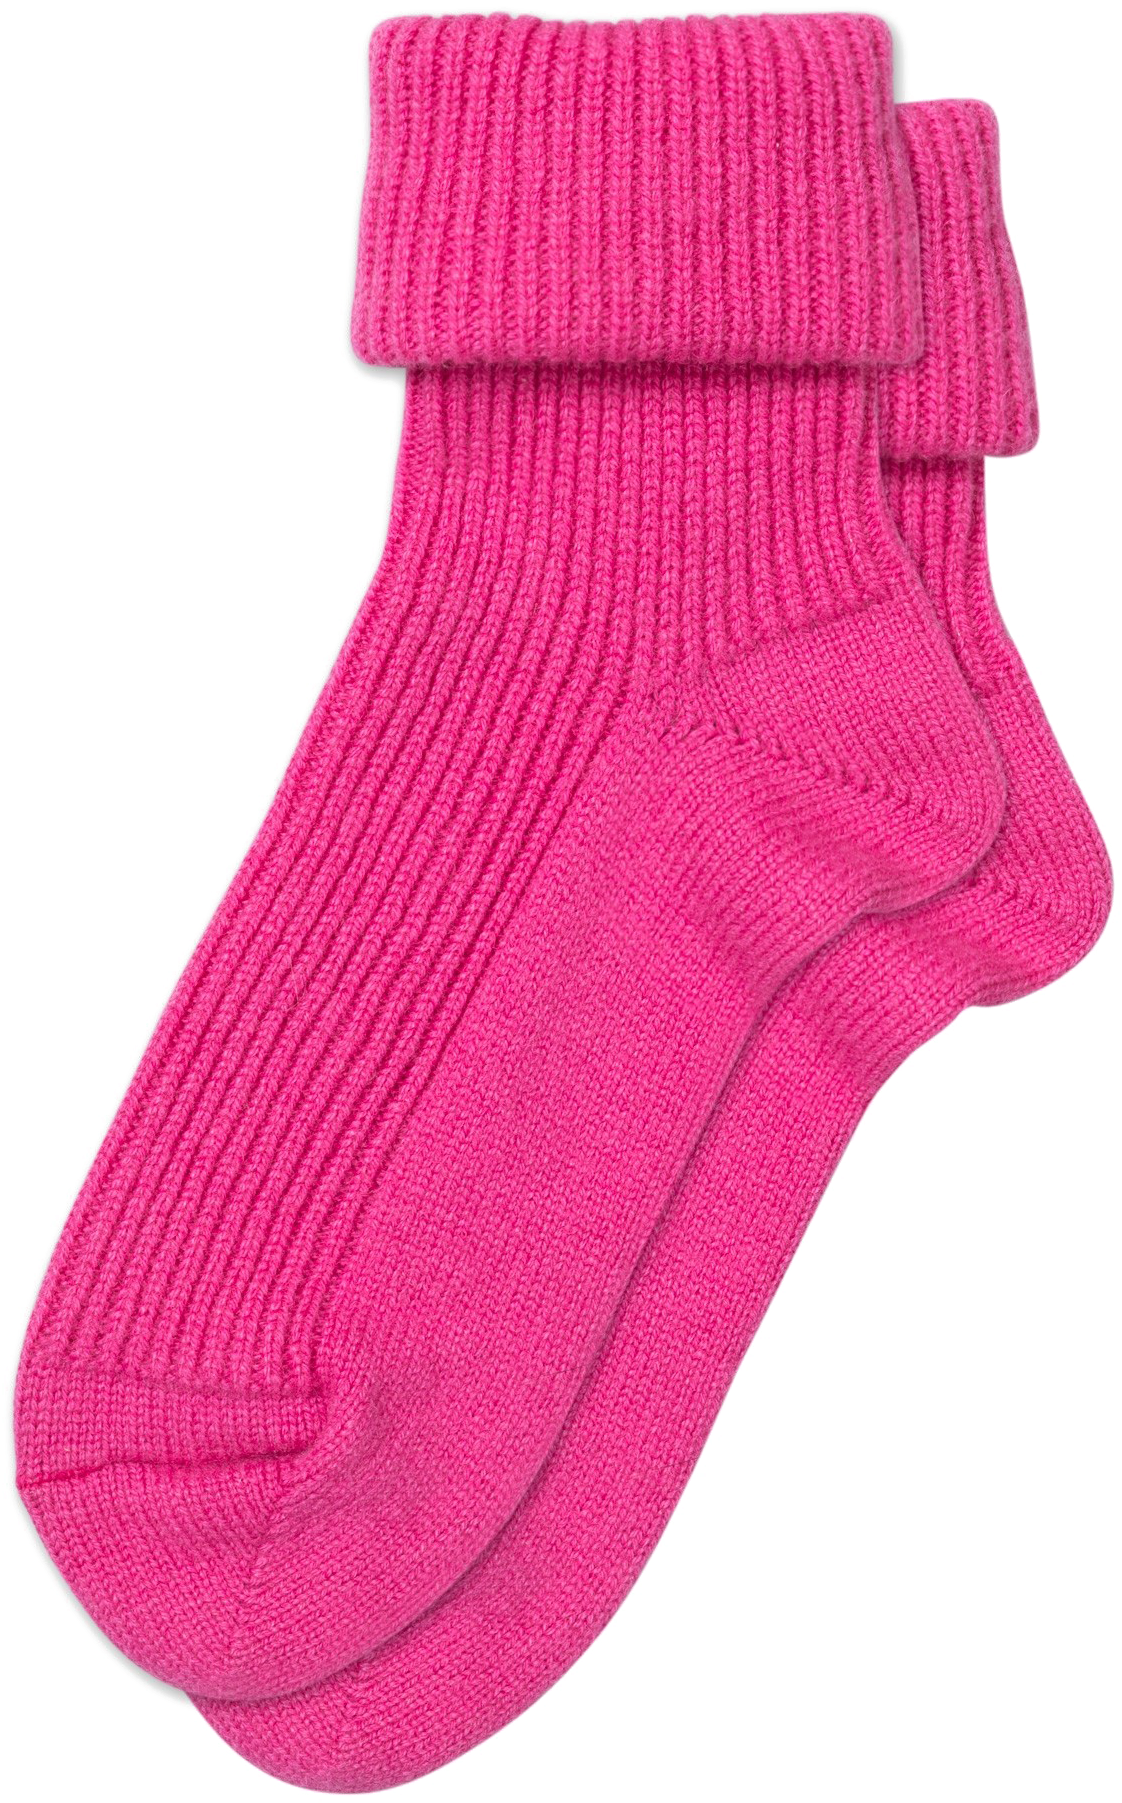 A Pair Of Pink Socks